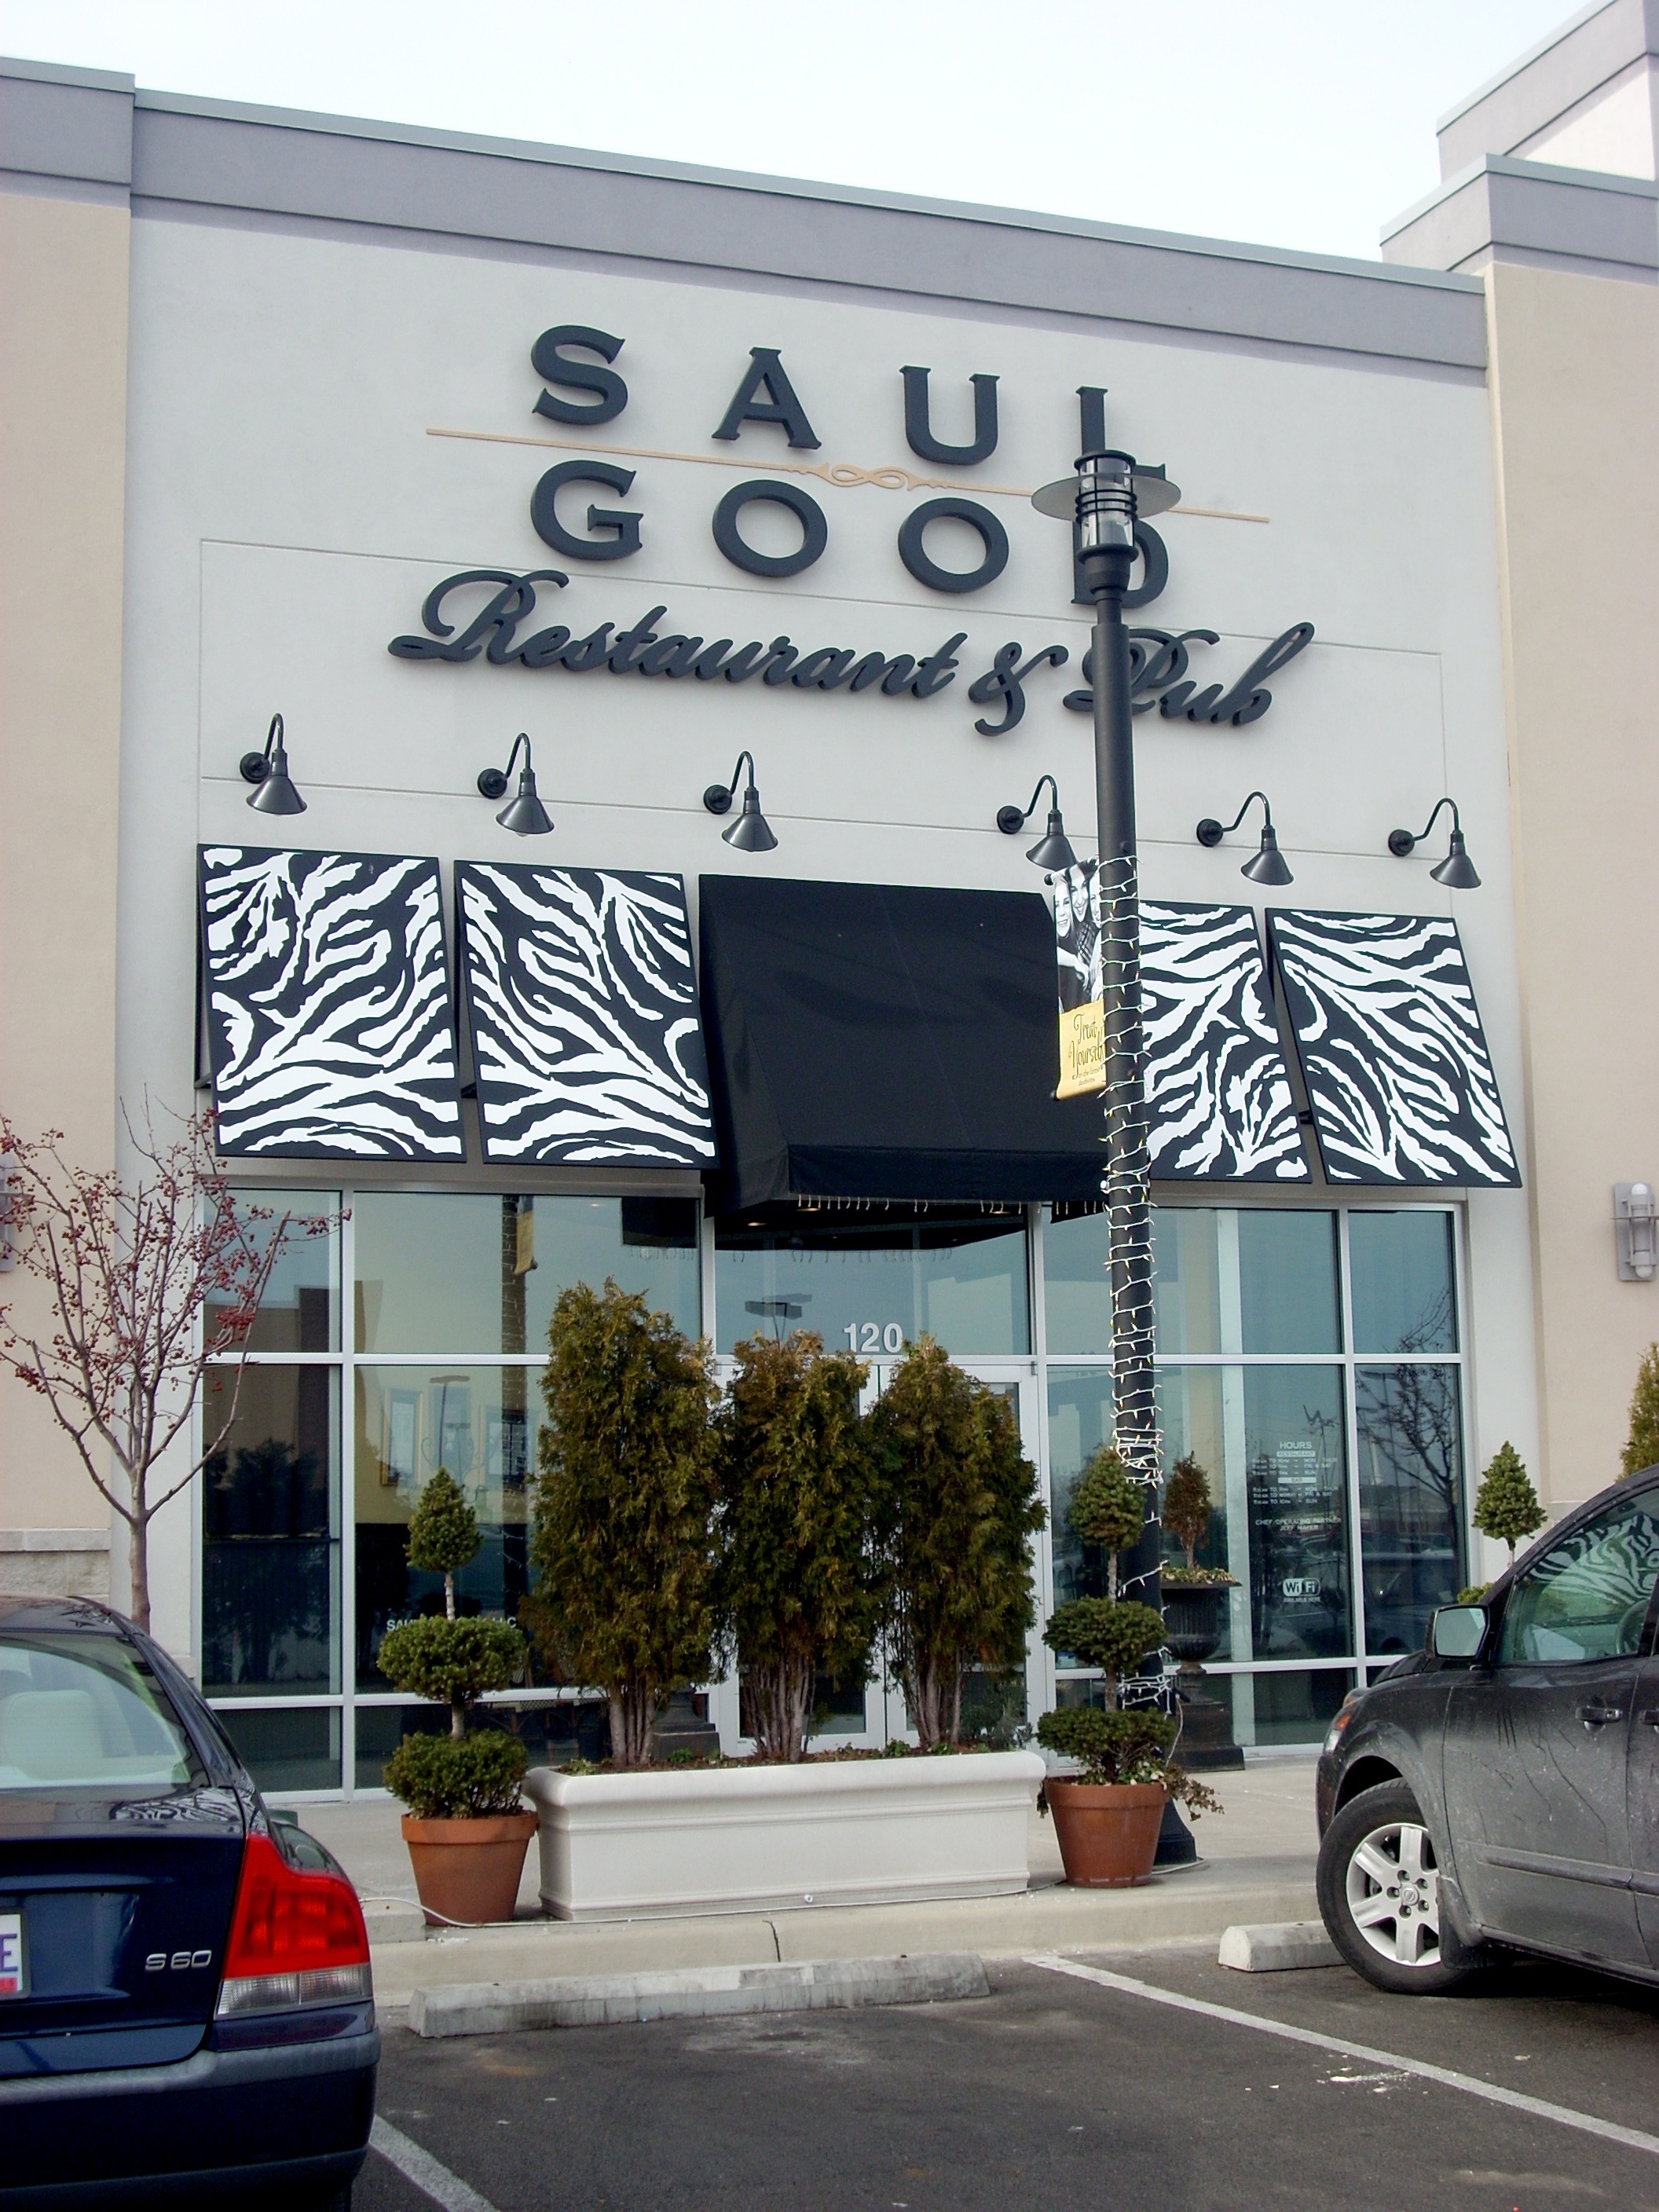 Saul Goode's